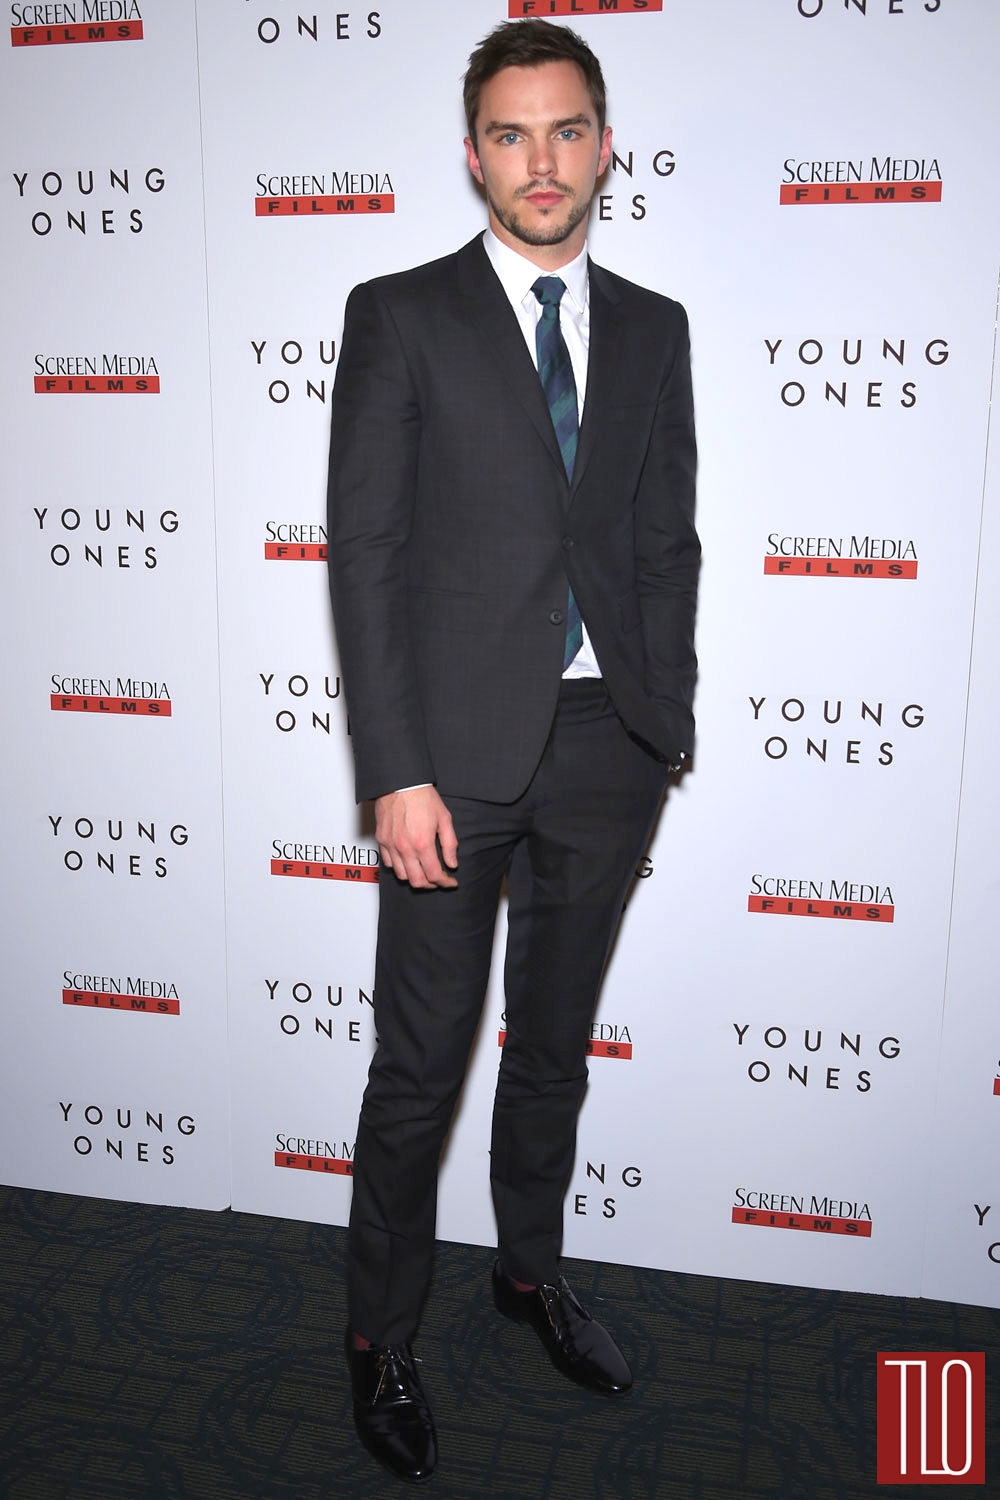 Nicholas-Hoult-Young-Ones-Movie-Premiere-Red-Carpet-Tom-Lorenzo-Site-TLO (1)